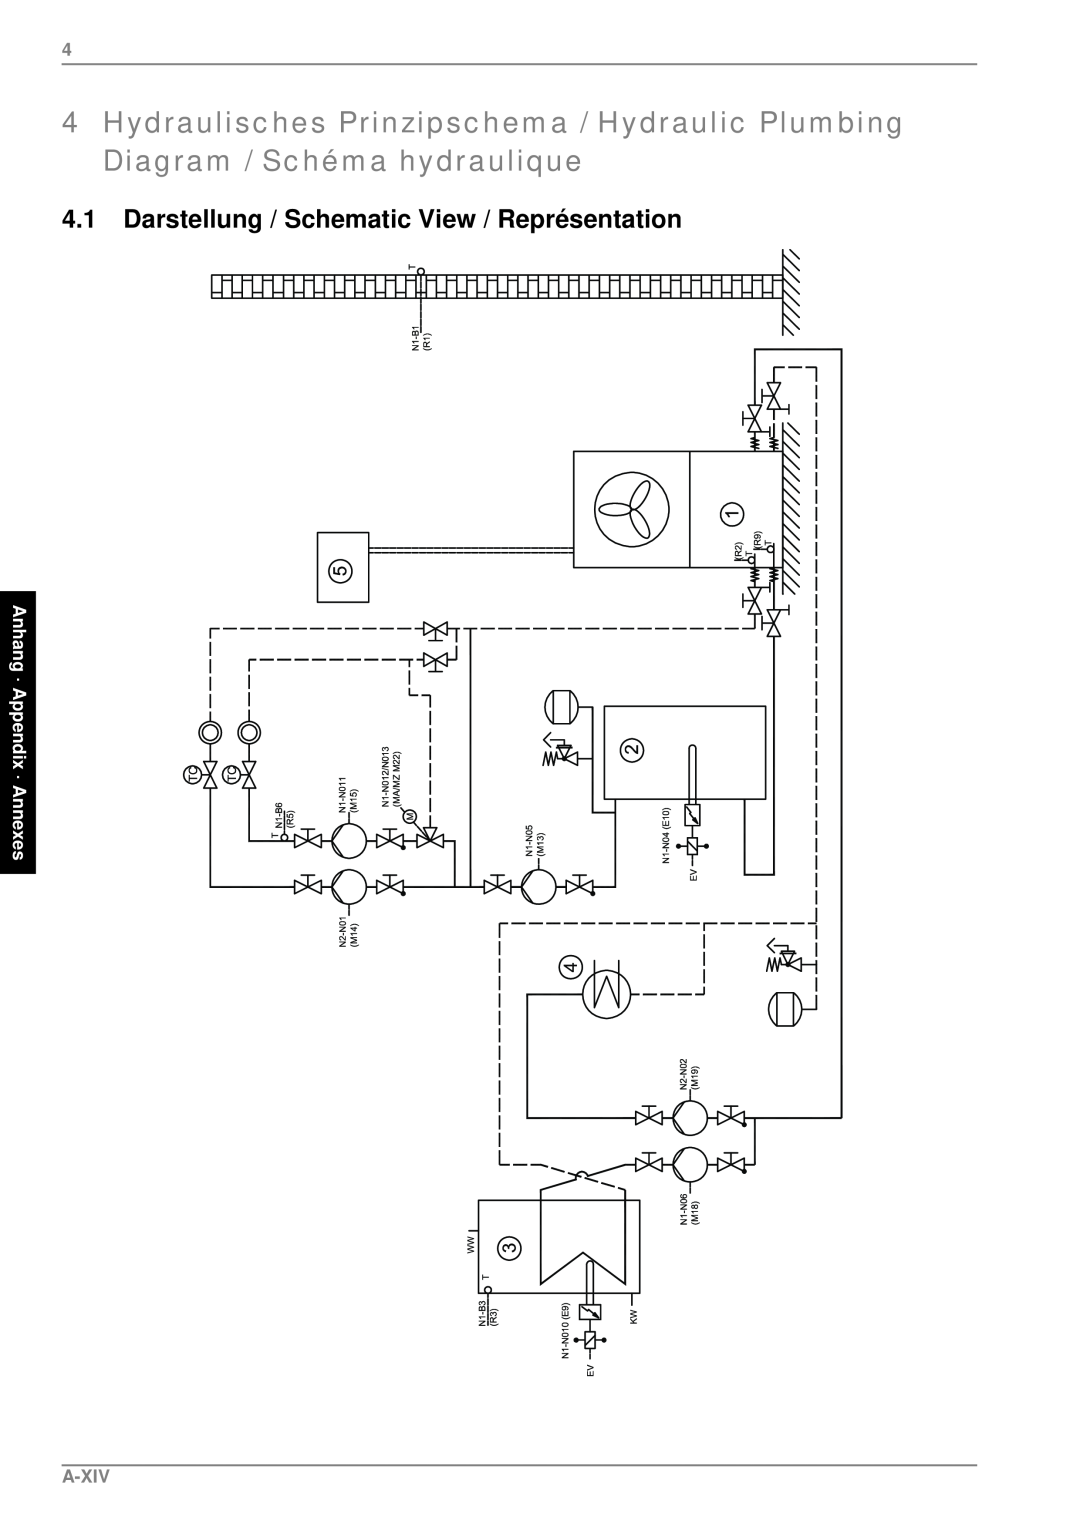 Dimplex LI 11TER+, Heat Pump, 190 manual 4.1Darstellung / Schematic View / Représentation, Anhang · Appendix · Annexes, A-Xiv 